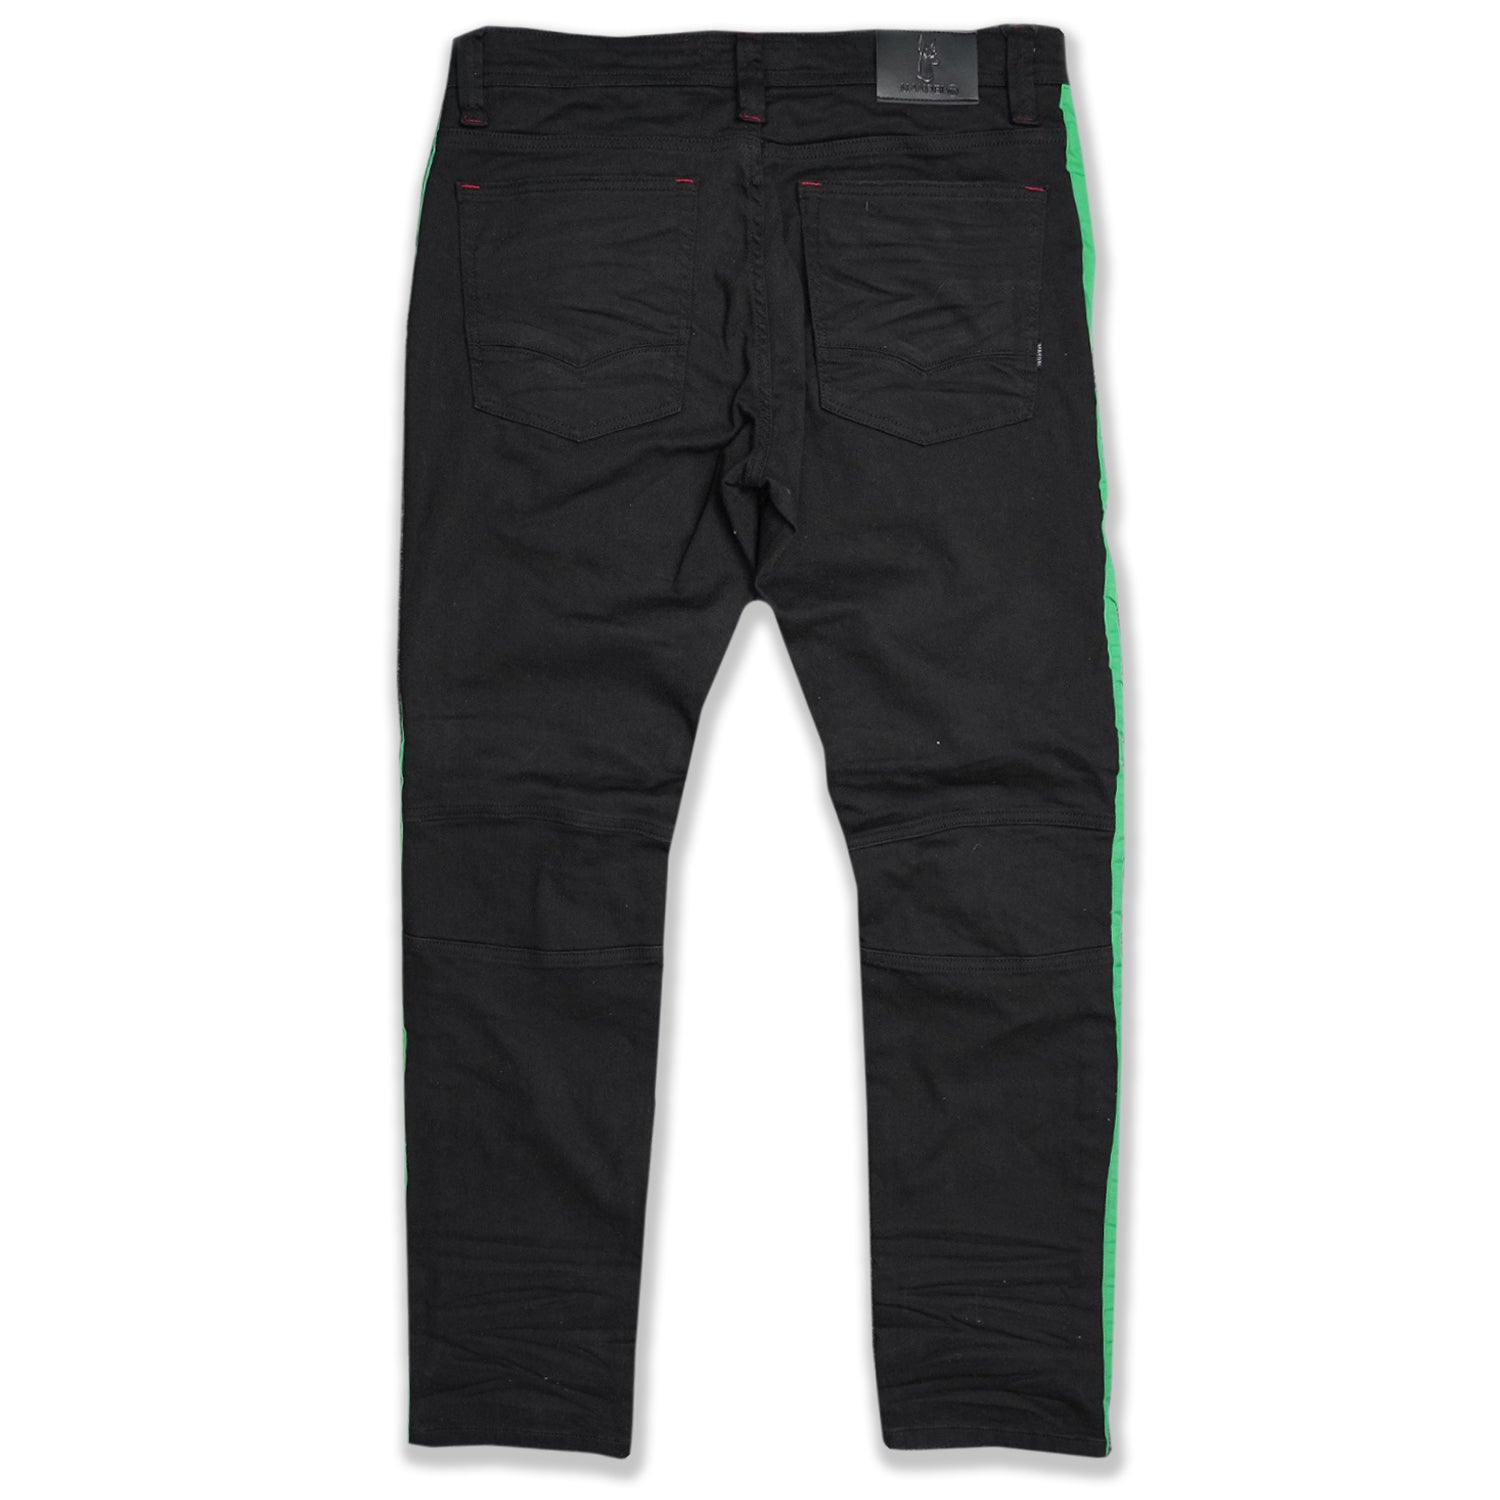 M1950 Makobi Biker Jeans w/ Nylon Stripes - Black